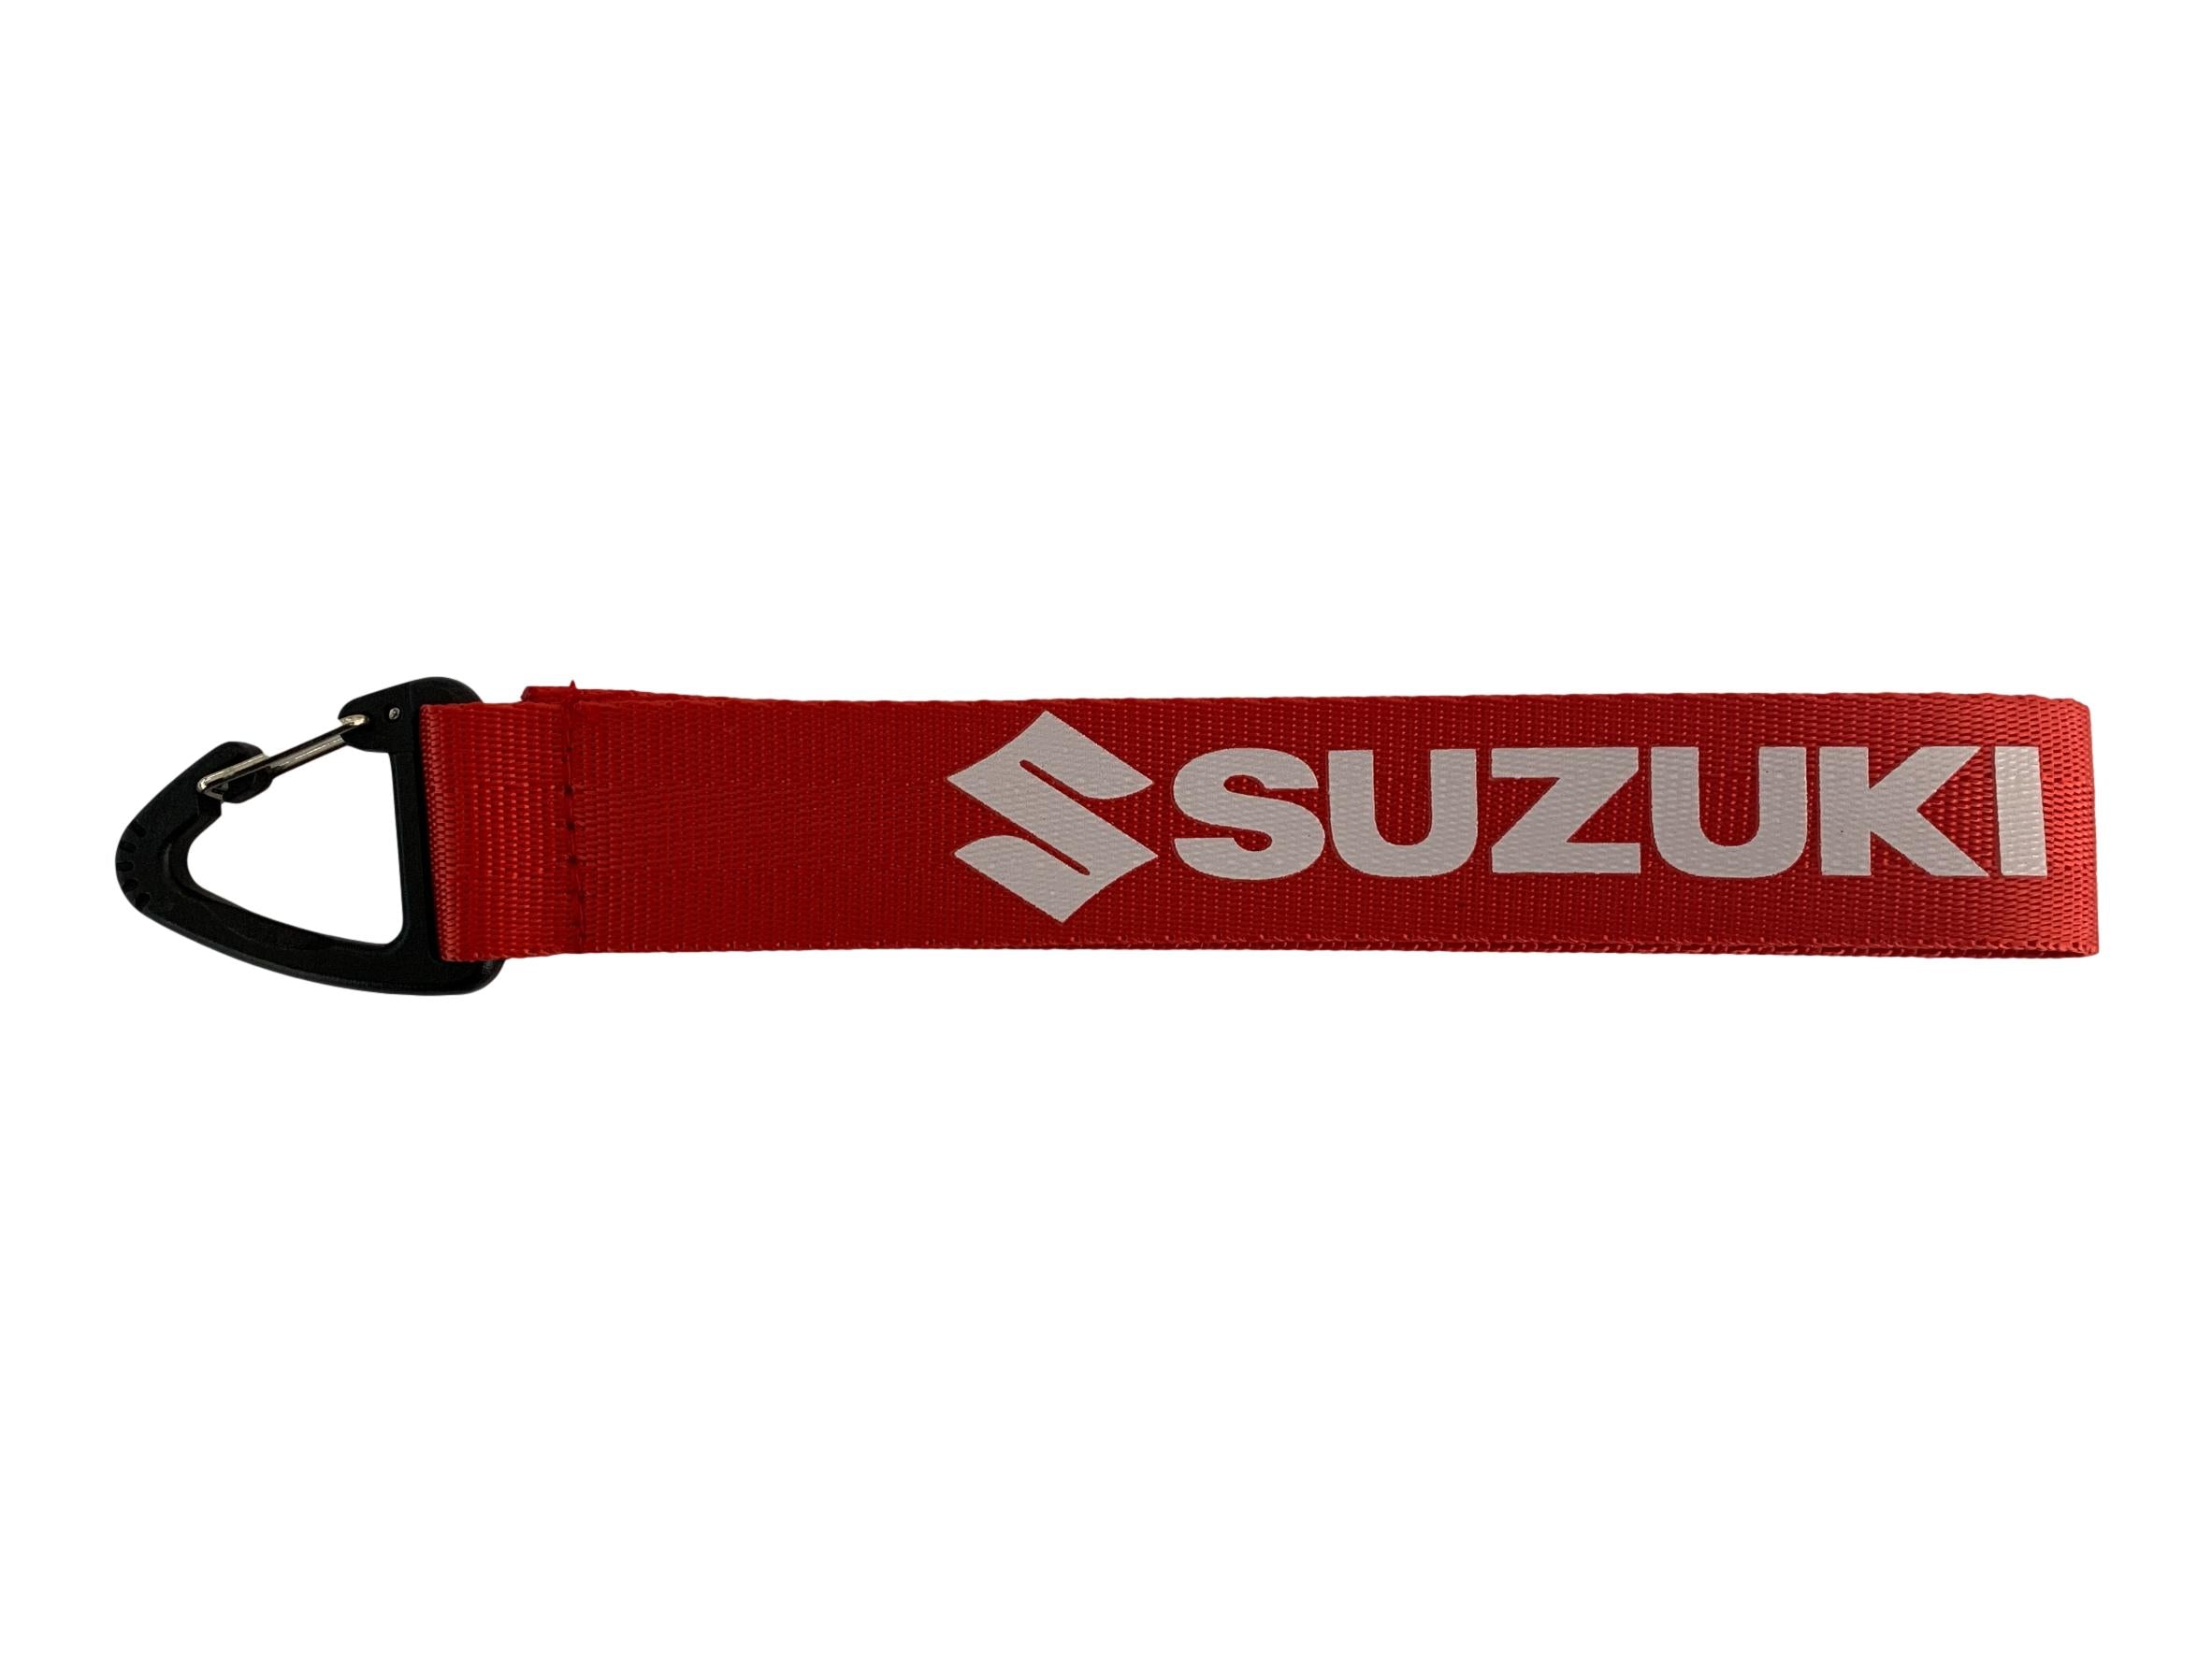 MC Auto: Suzuki Red Key Ring